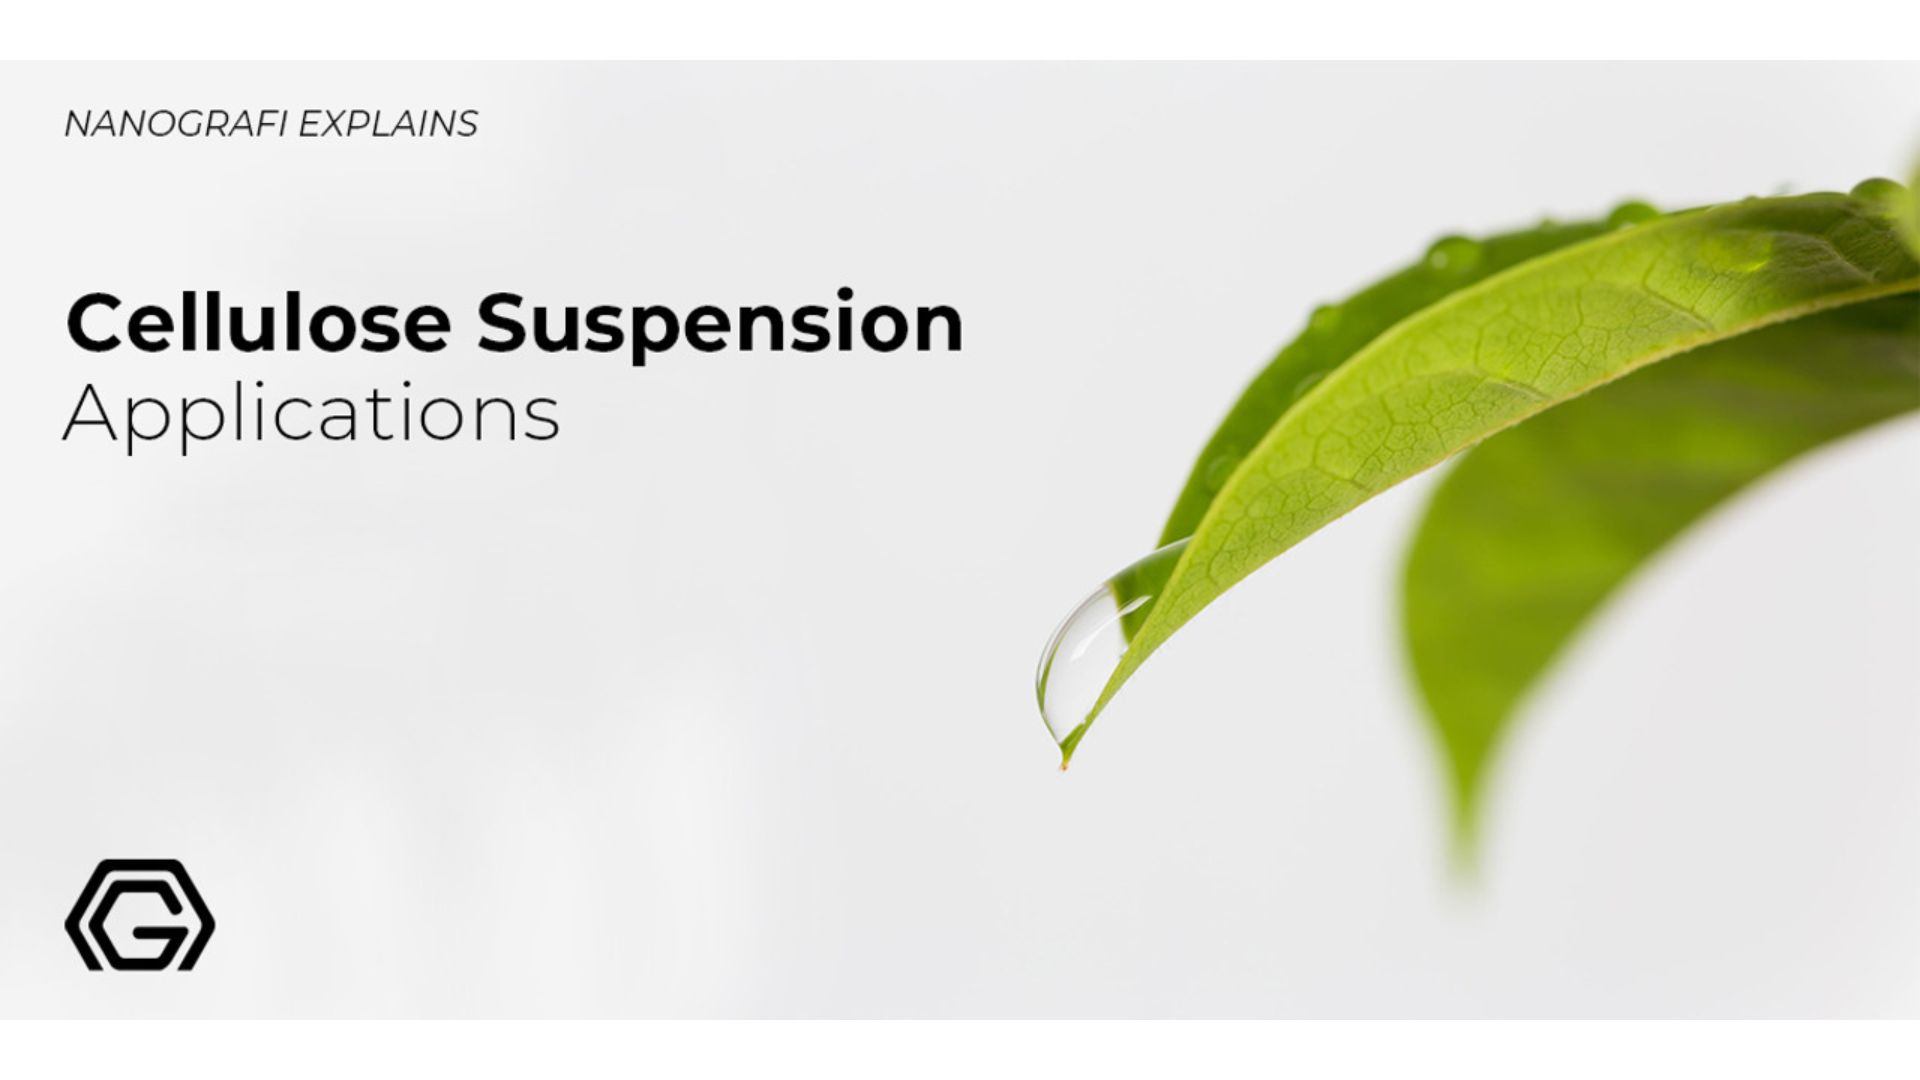 Cellulose suspension applications